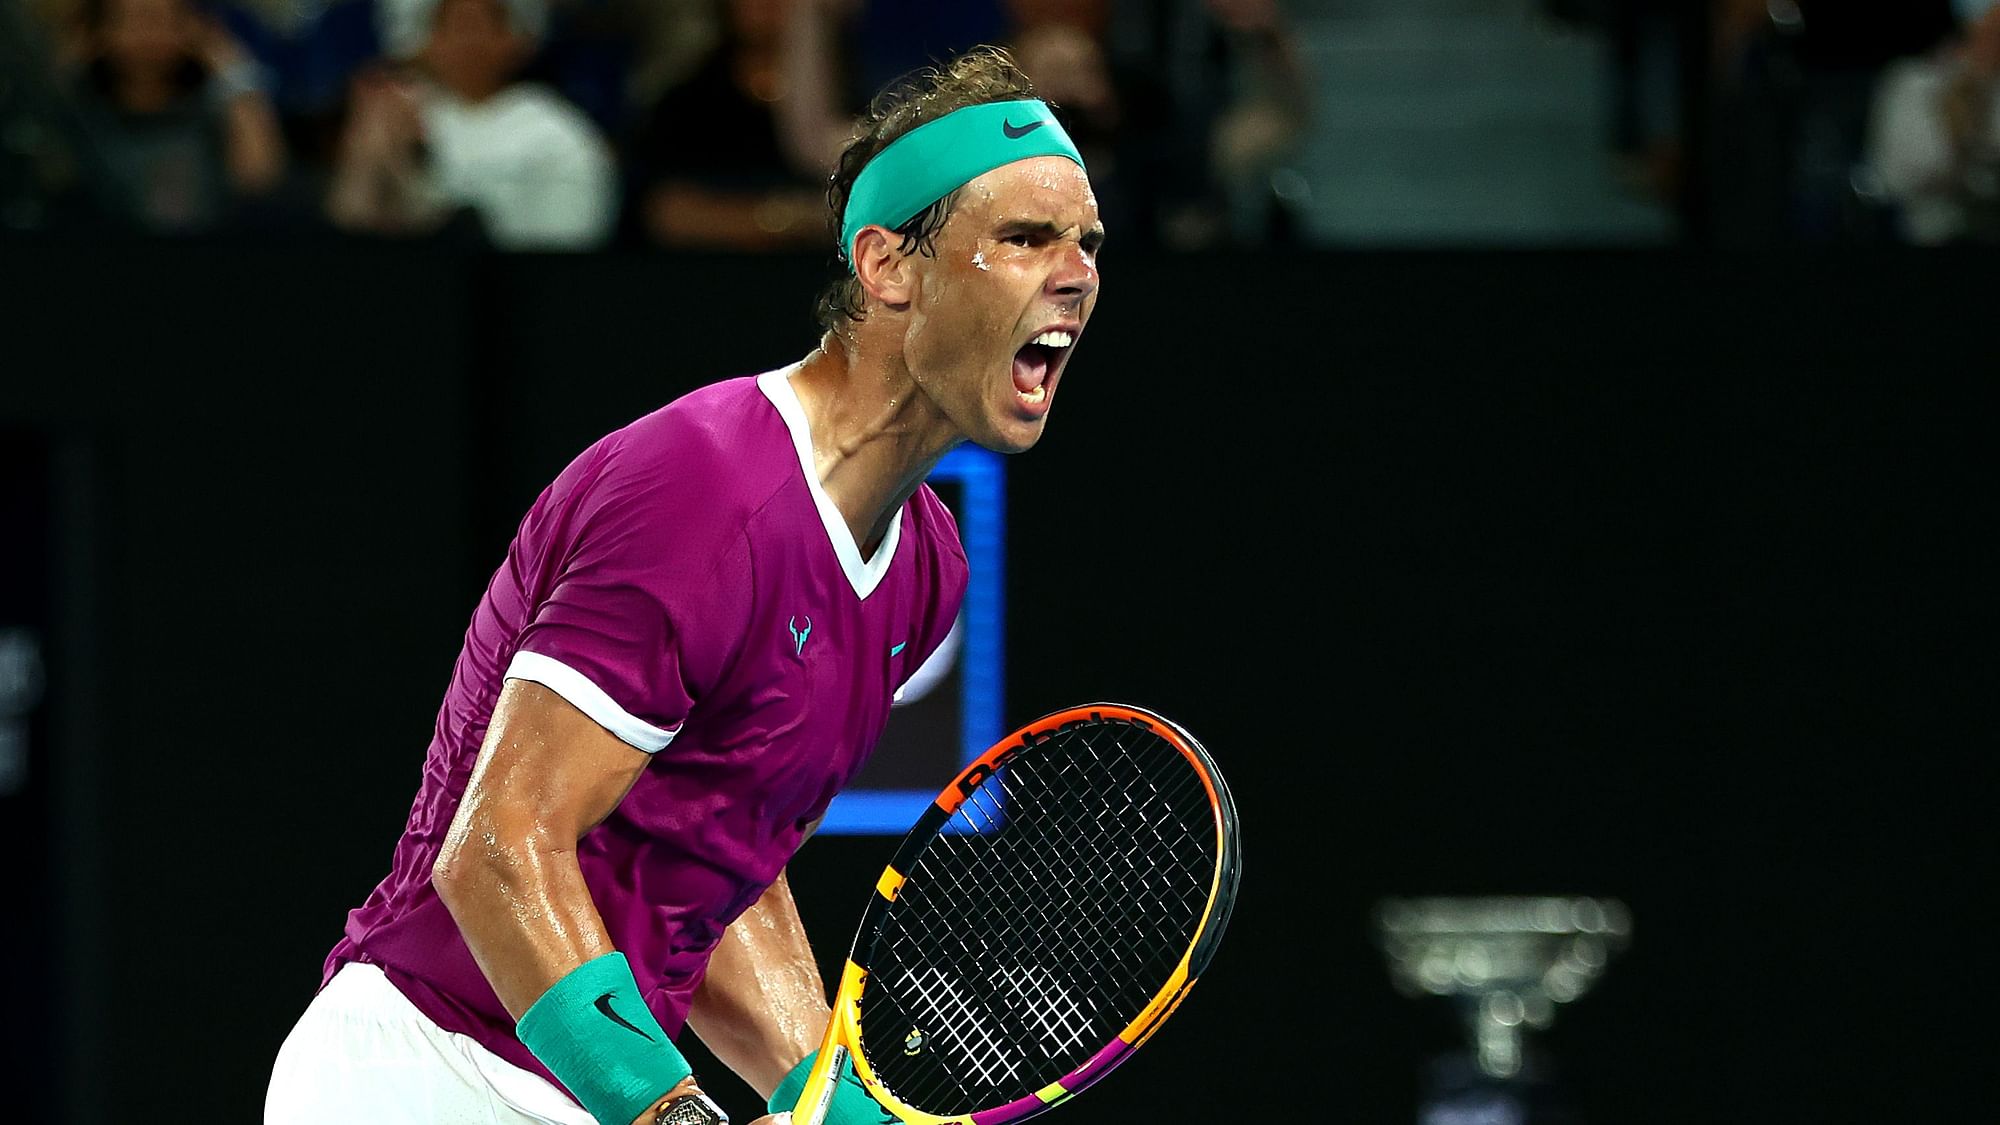 <div class="paragraphs"><p>Rafael Nadal in action.&nbsp;</p></div>